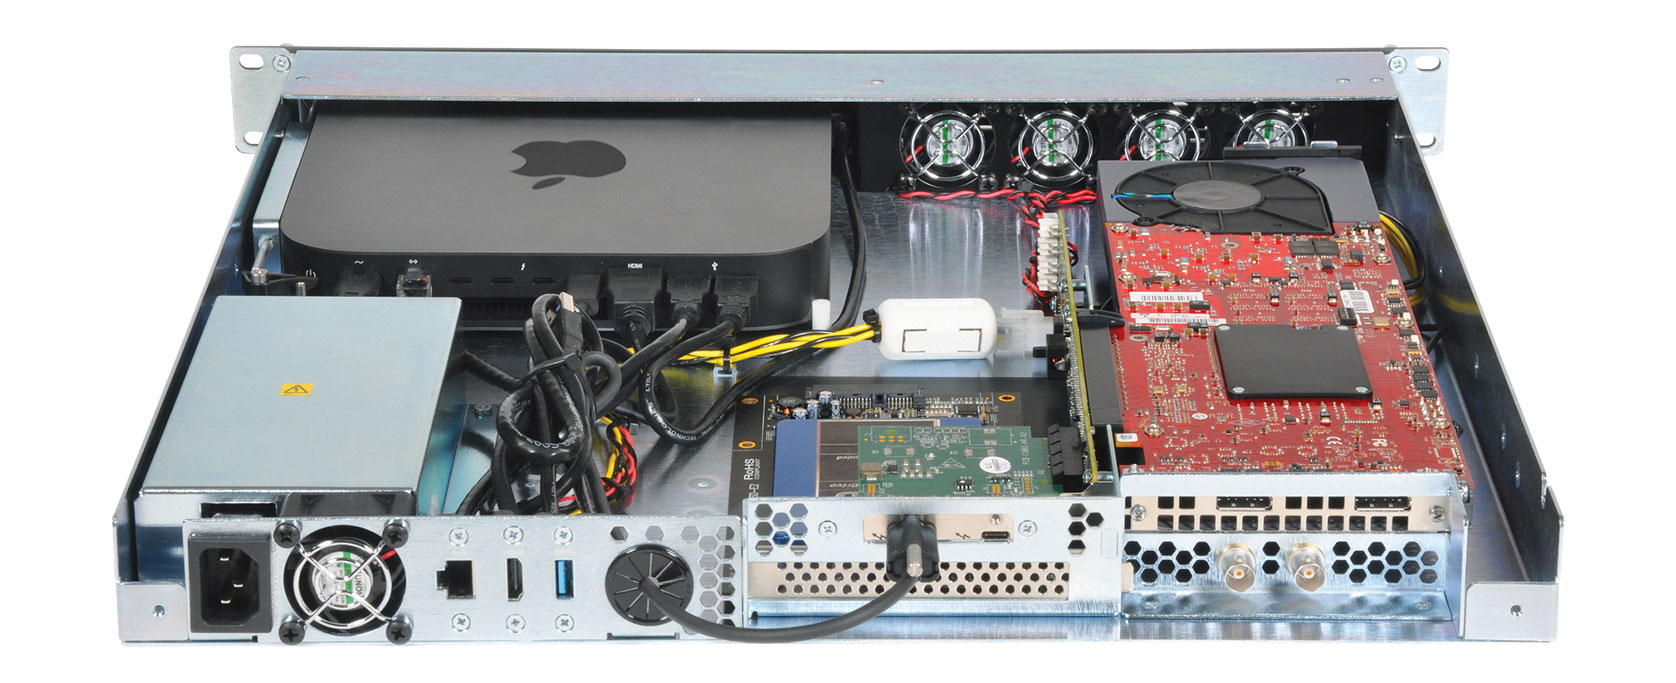 Rack-Mount That Mac Mini with Sonnet's Latest xMac Mini Server 